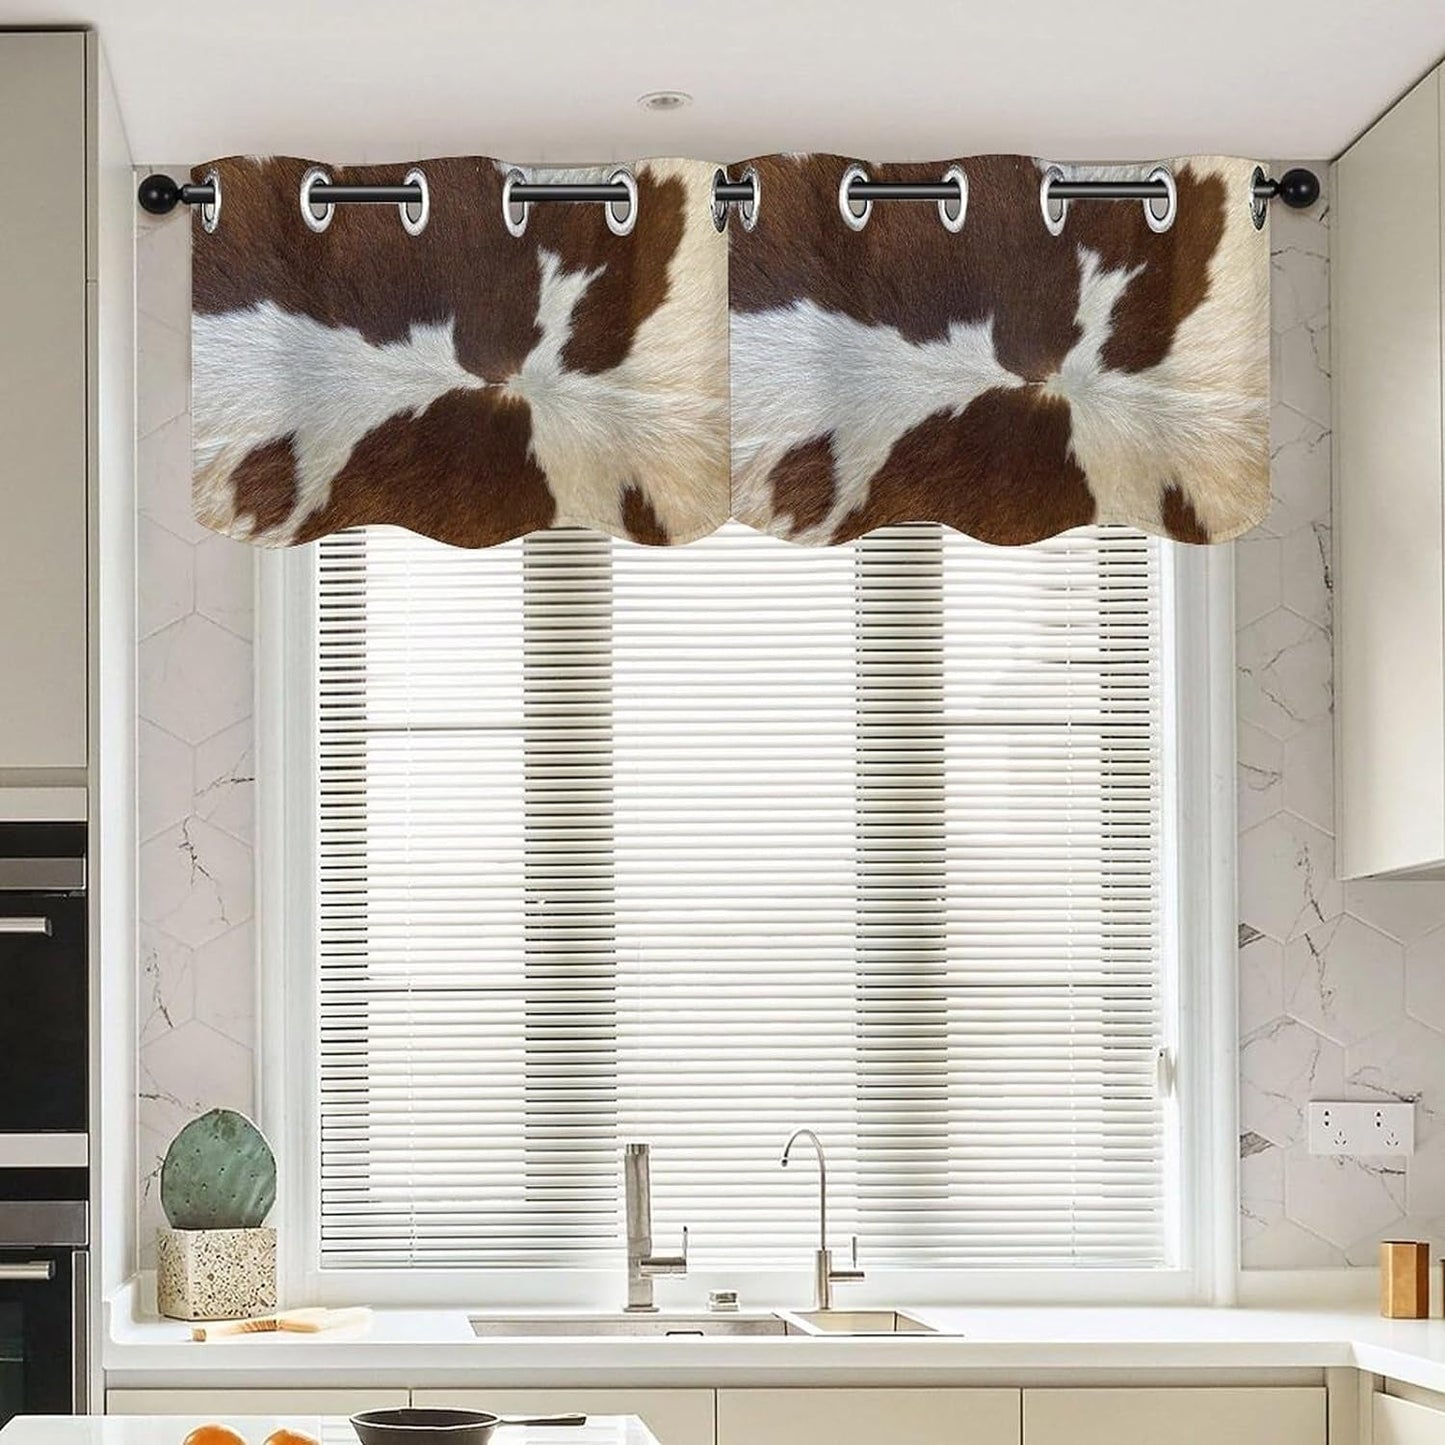 2 Panels Kitchen Curtain Valance Western Cow Hide Print Valance Curtain for Kitchen Bathroom Living Room Bedroom Windows Blackout Decorative Grommet Short Valance 52W X 18L